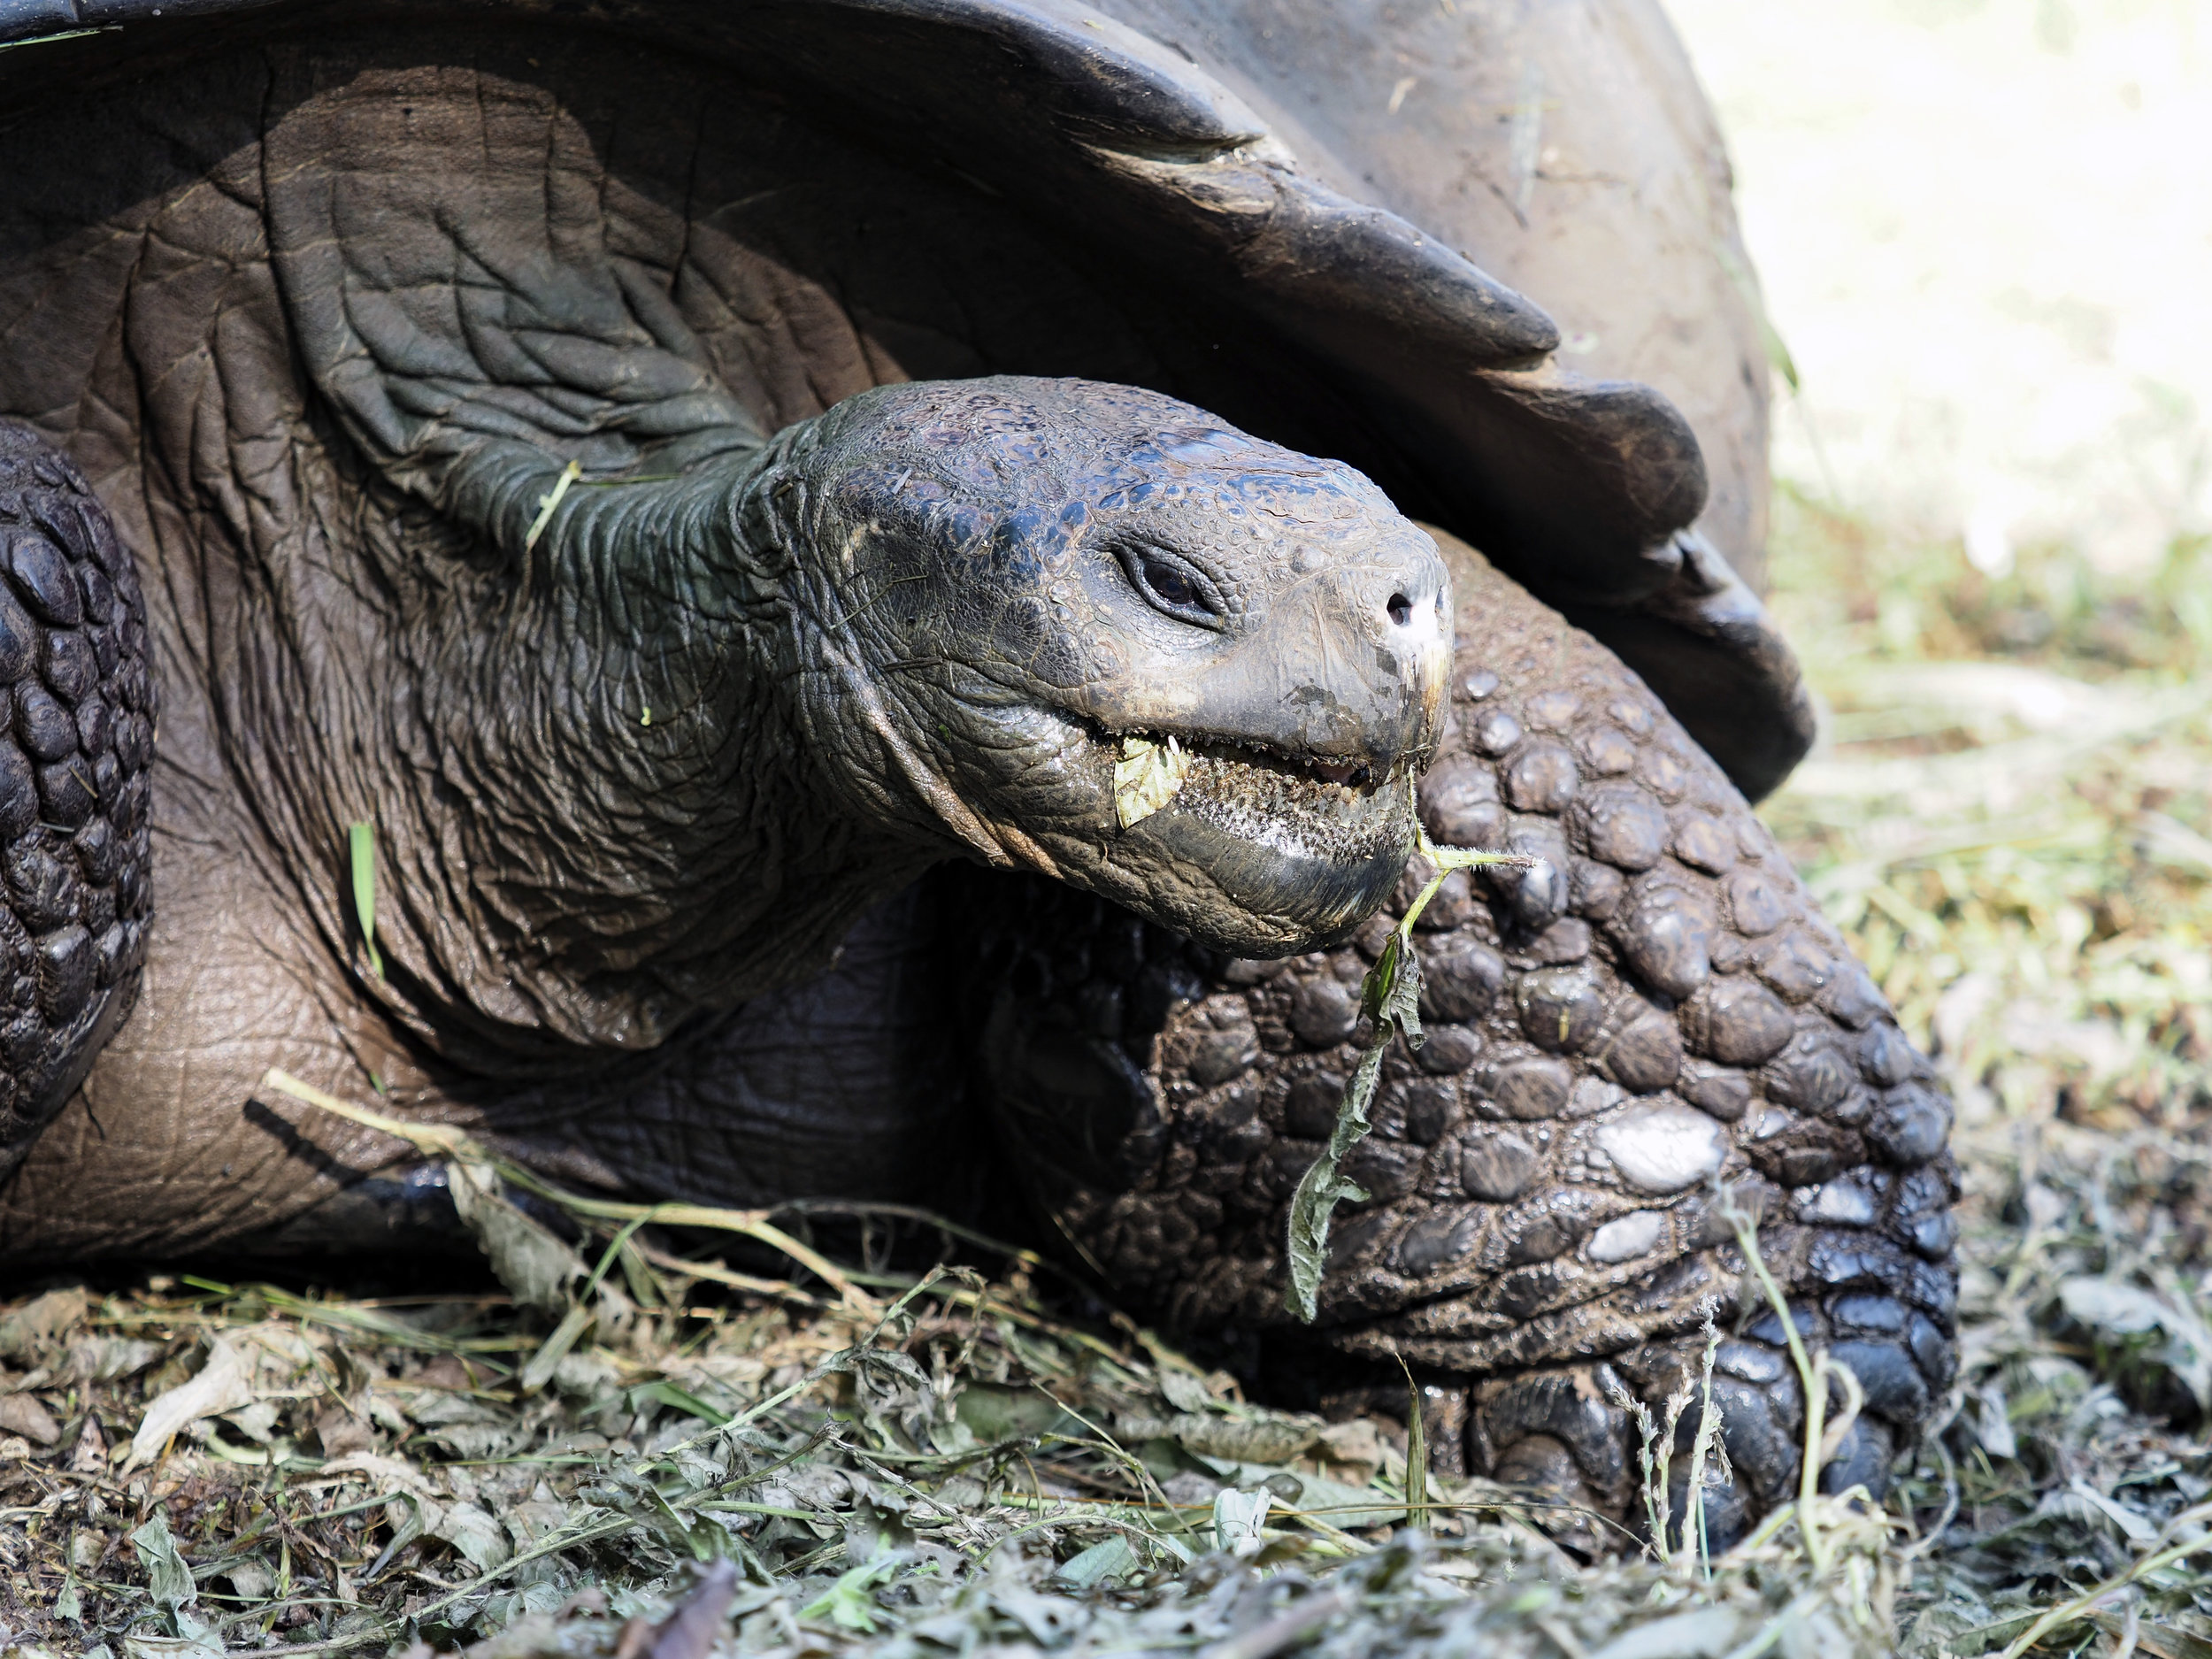  Galápagos giant tortoise, Santa Cruz  